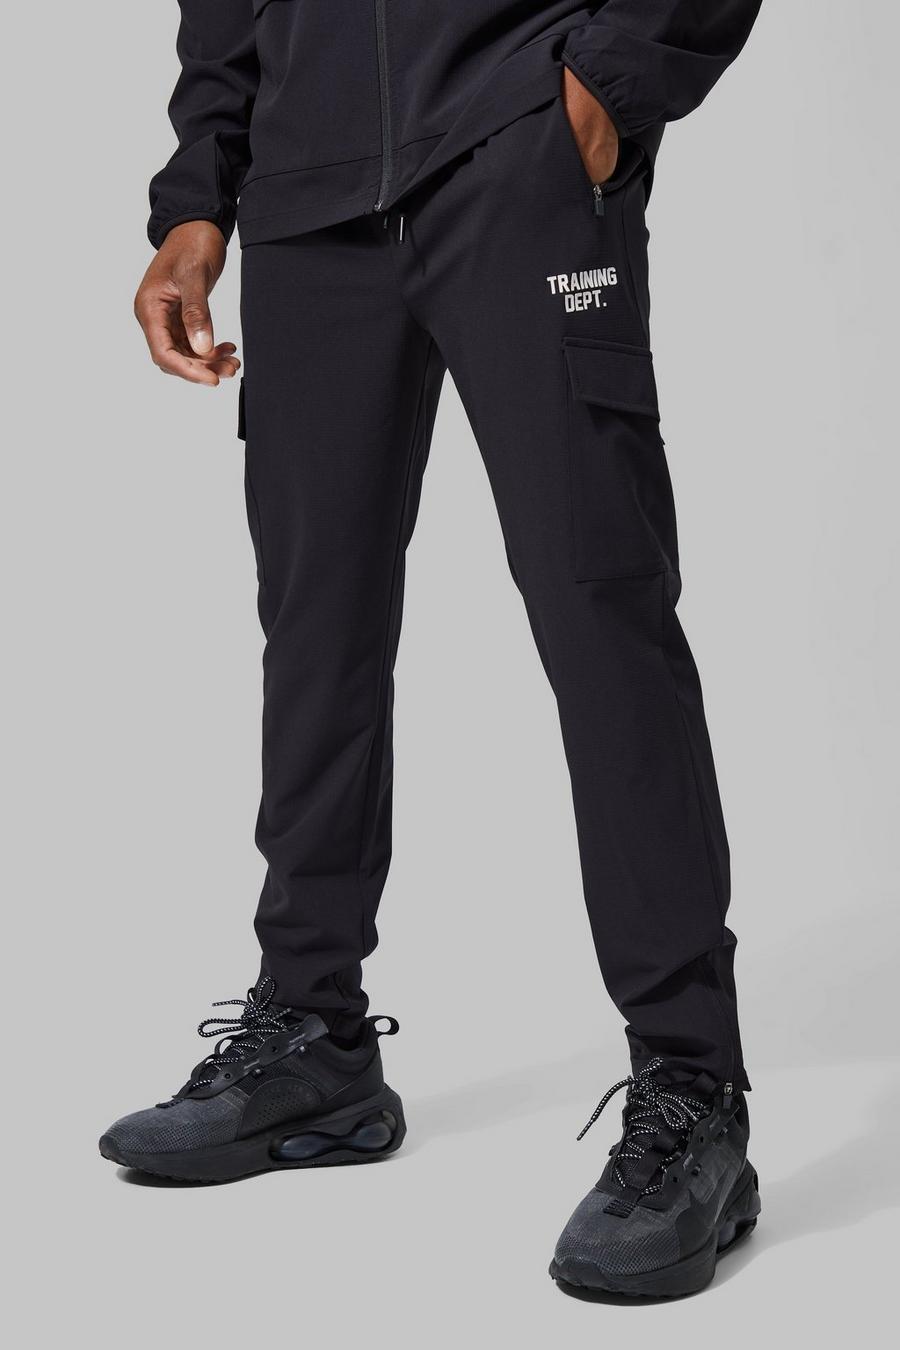 Pantalón deportivo Active cargo ajustado, Black